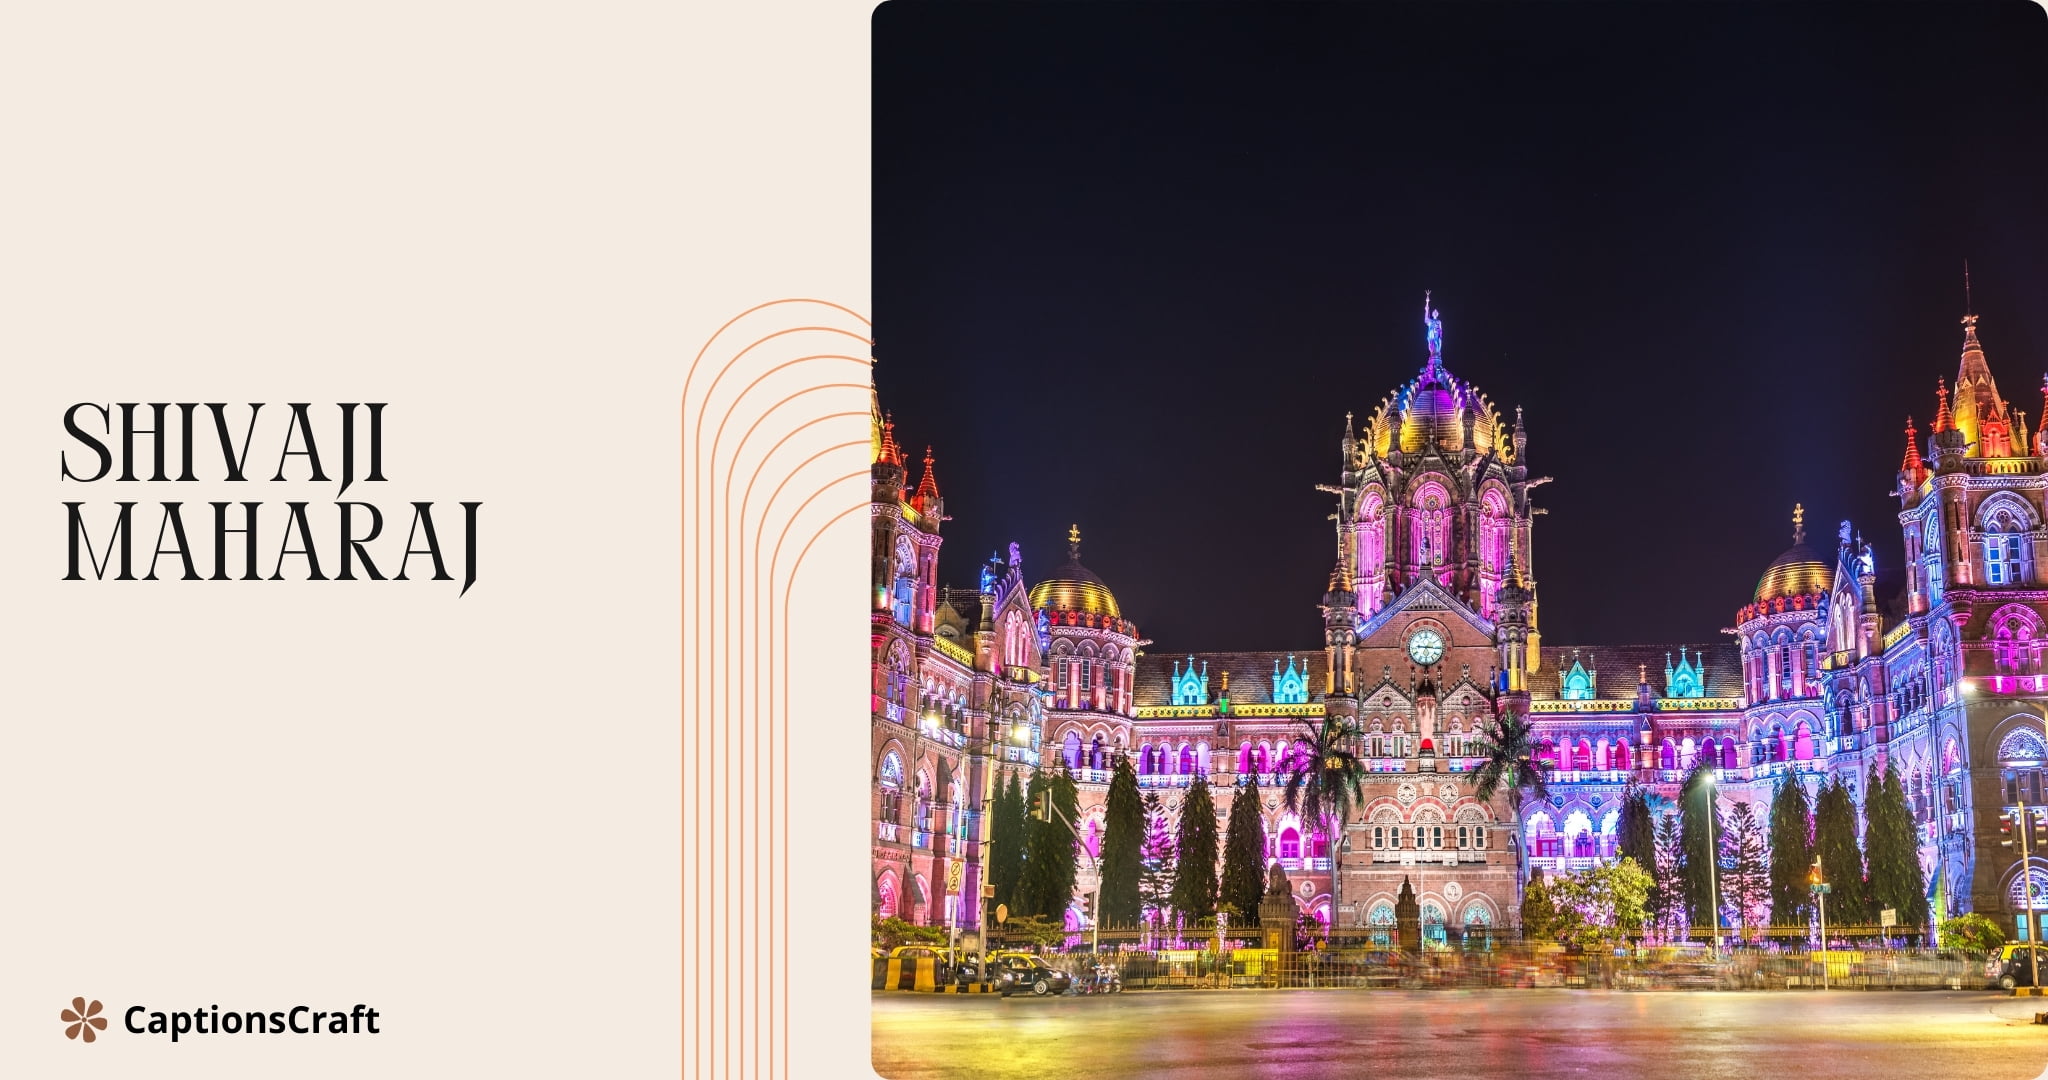 Shivaji Maharaj - The City of Lights: A majestic image of Shivaji Maharaj, symbolizing his brilliance and leadership in the city.